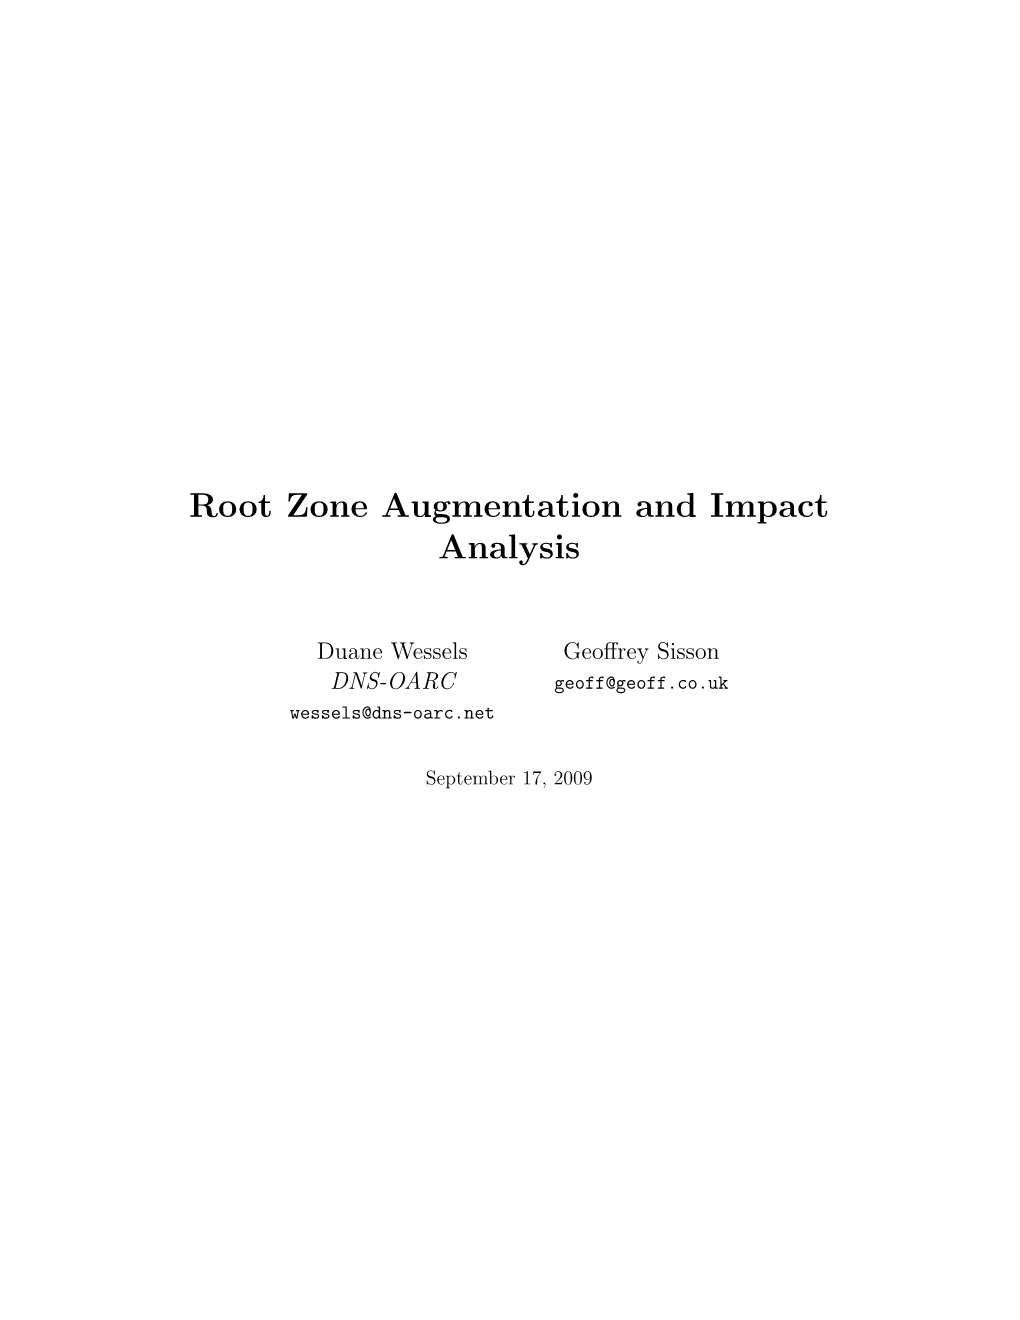 Root Zone Augmentation and Impact Analysis